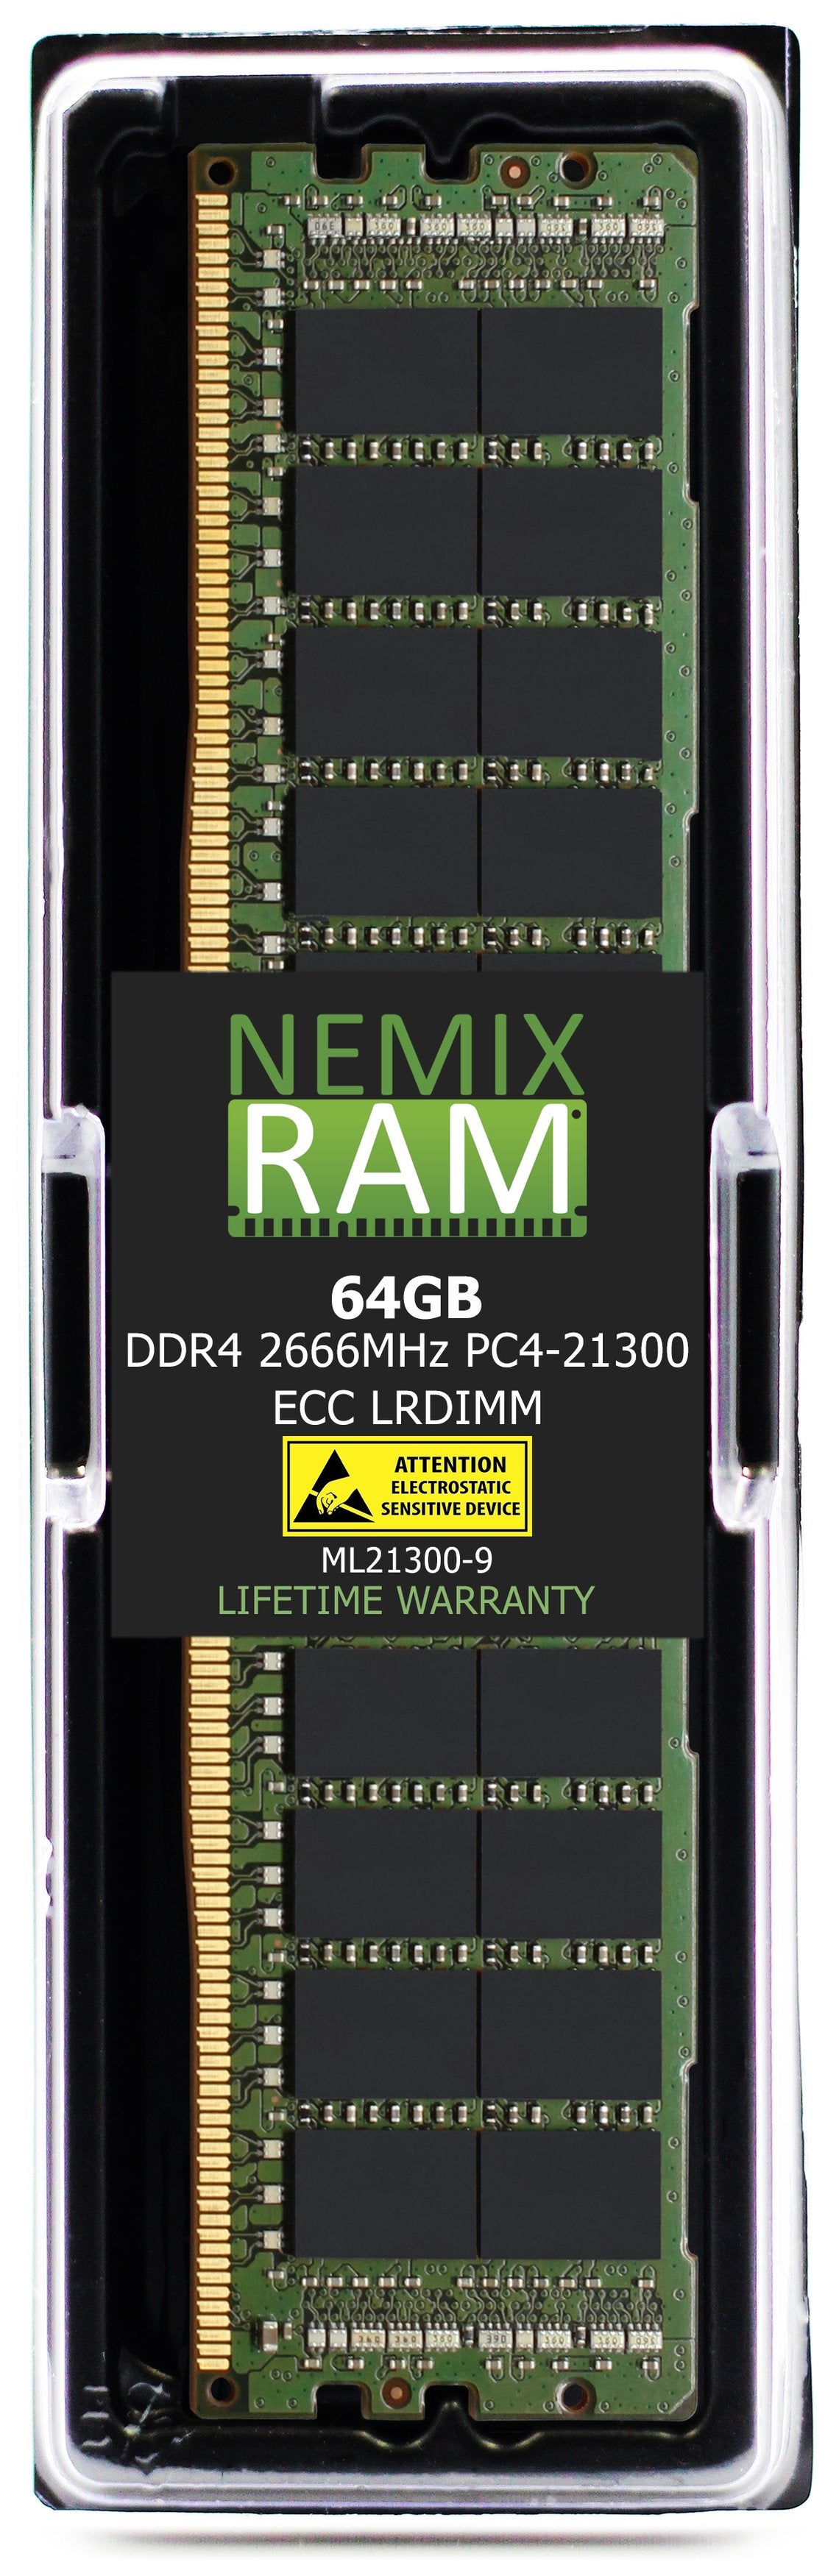 NEC Express5800 D120h Memory Module N8102-706F 64GBDDR4 2666MHZ PC4-21300 LRDIMM